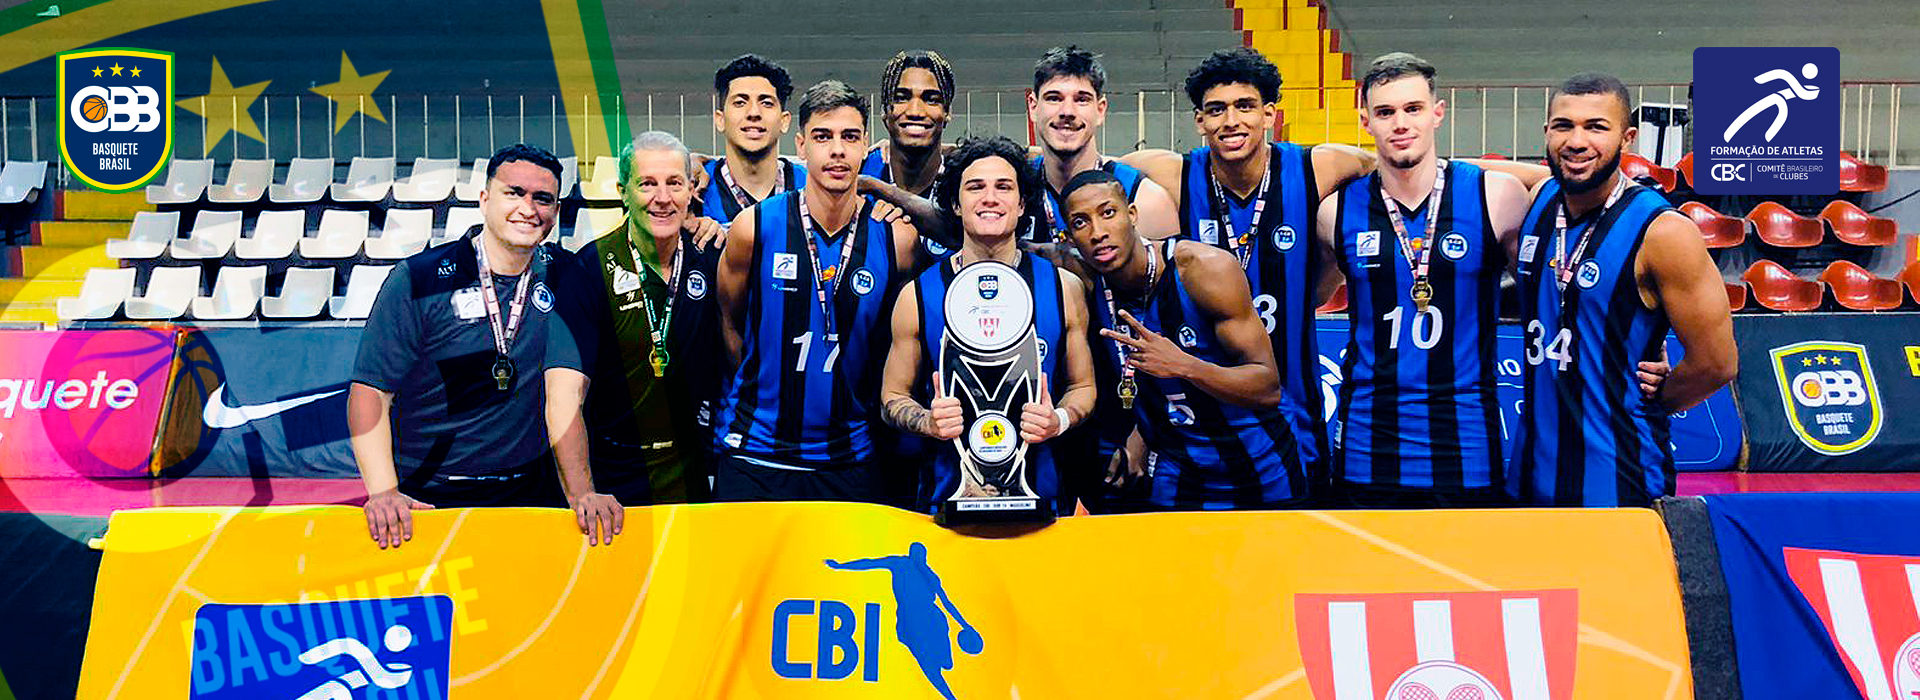 Esporte Clube Pinheiros-SP conquista título do CBI® Sub 19 de Basquetebol Masculino